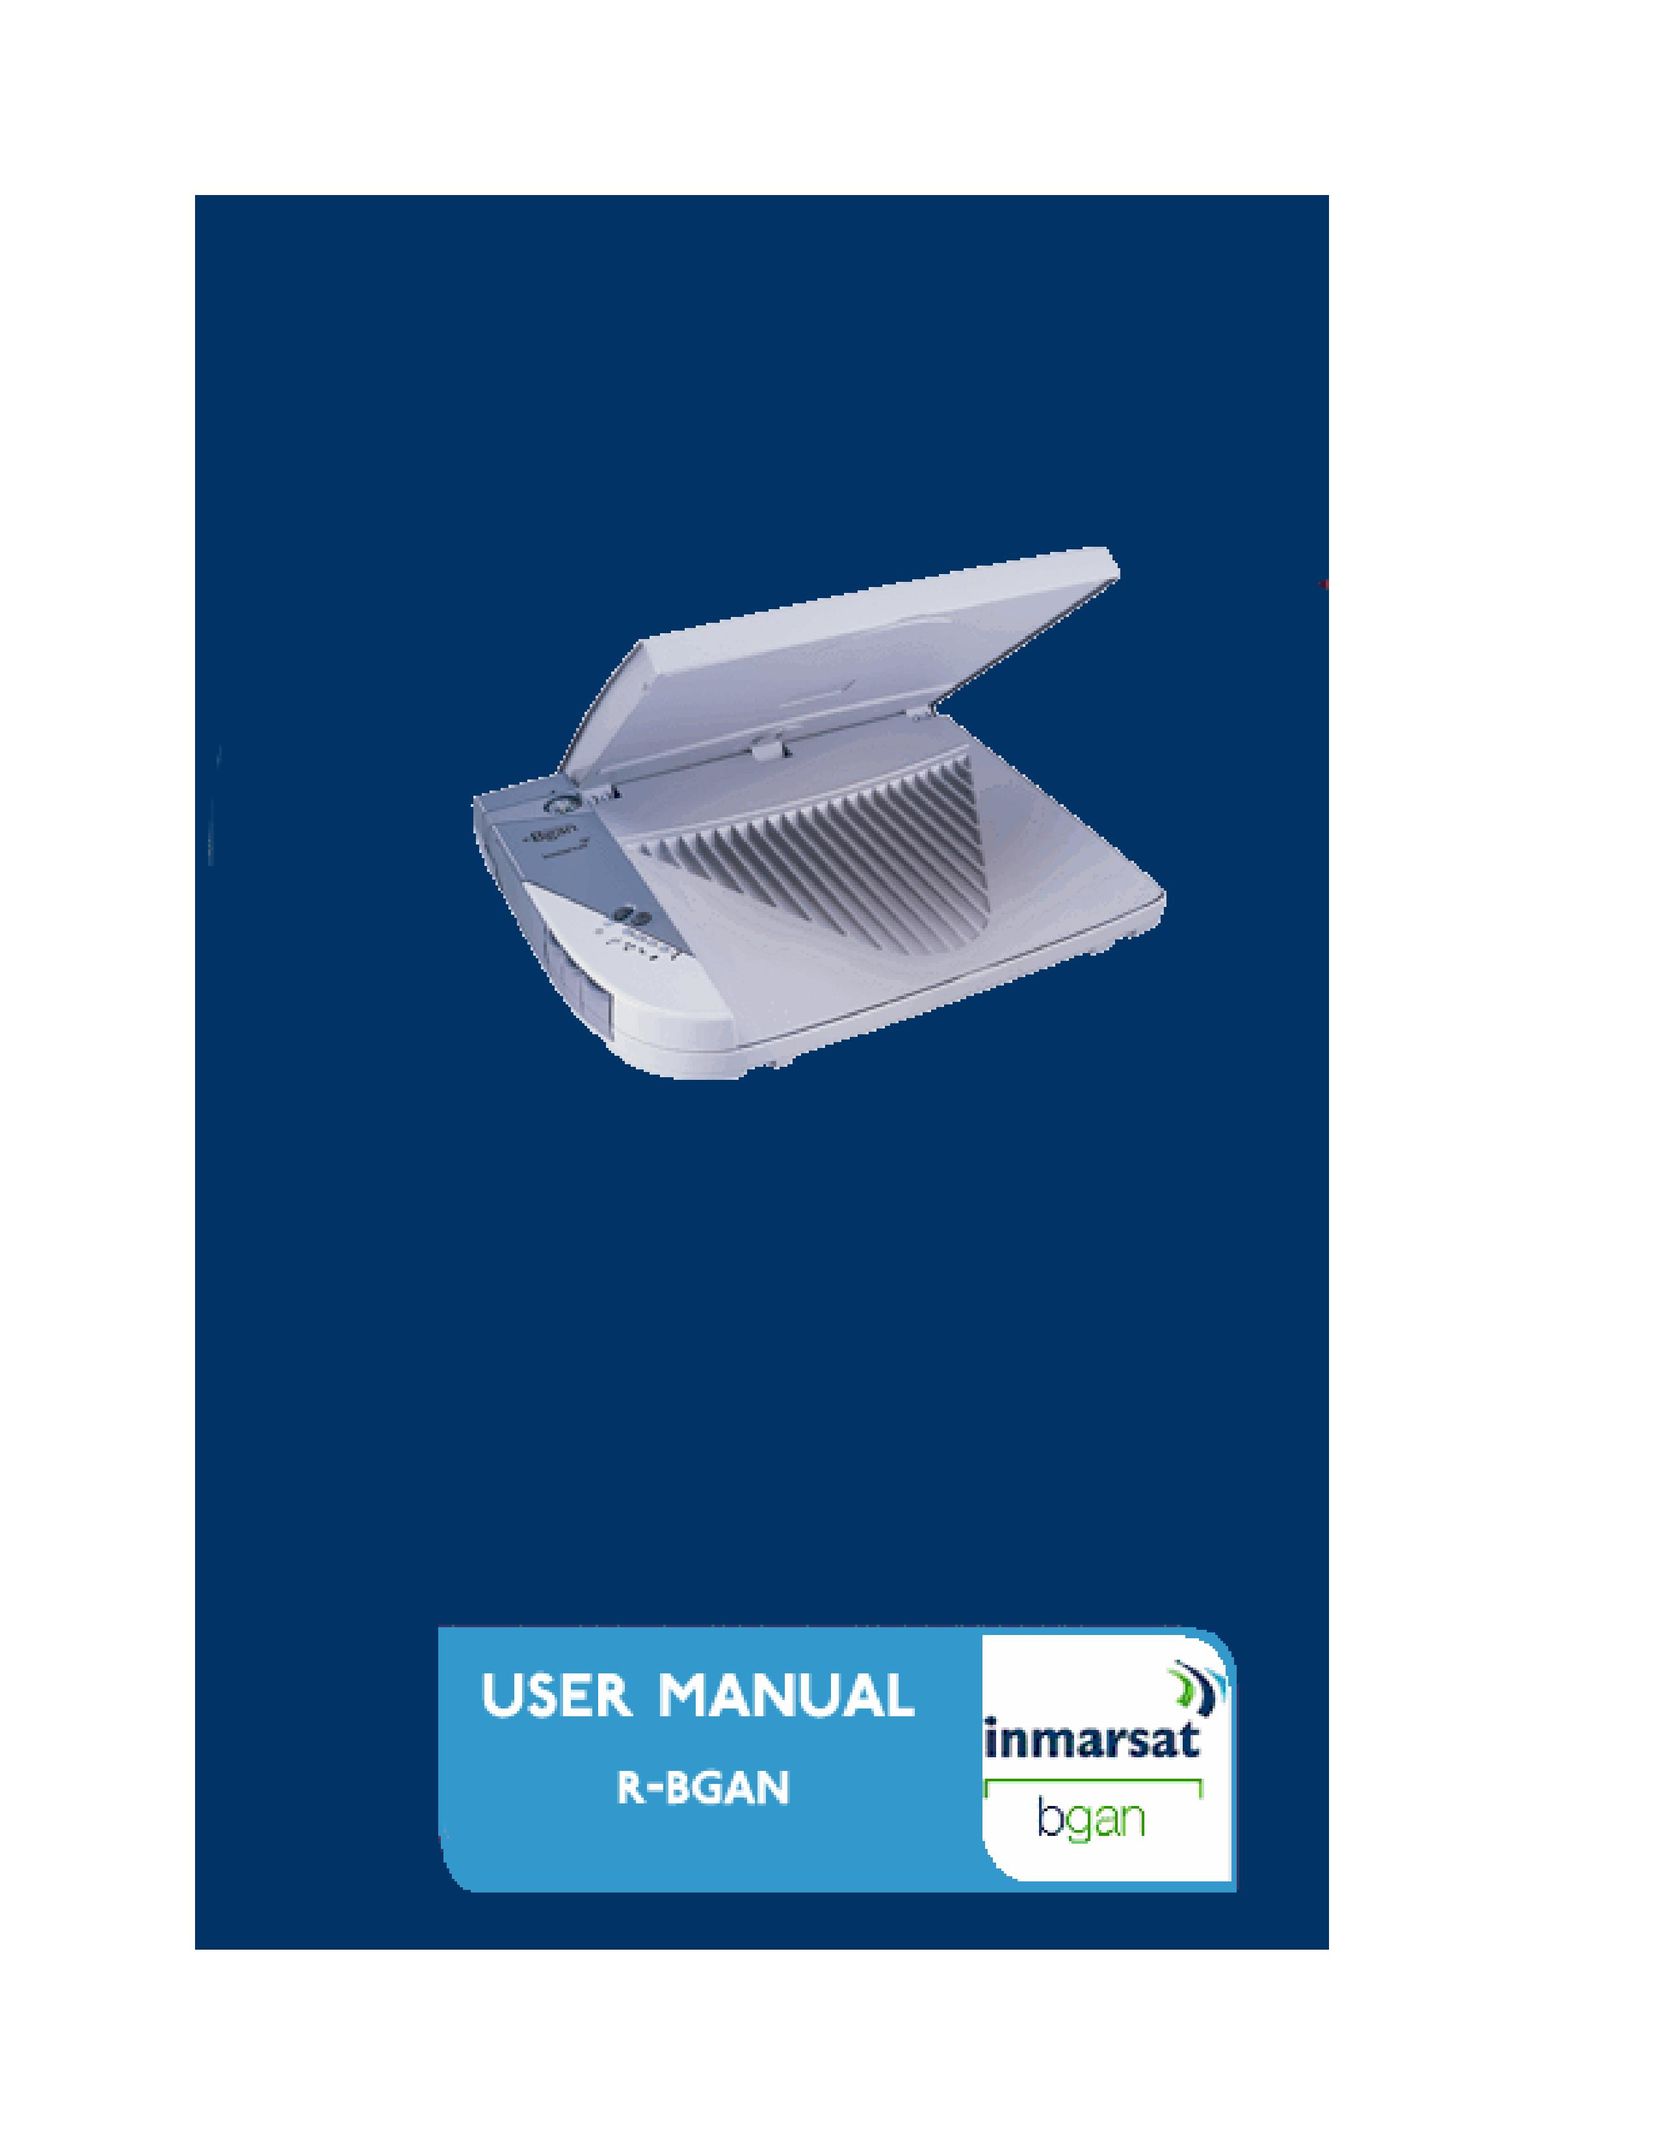 Hughes R-BGAN Network Router User Manual